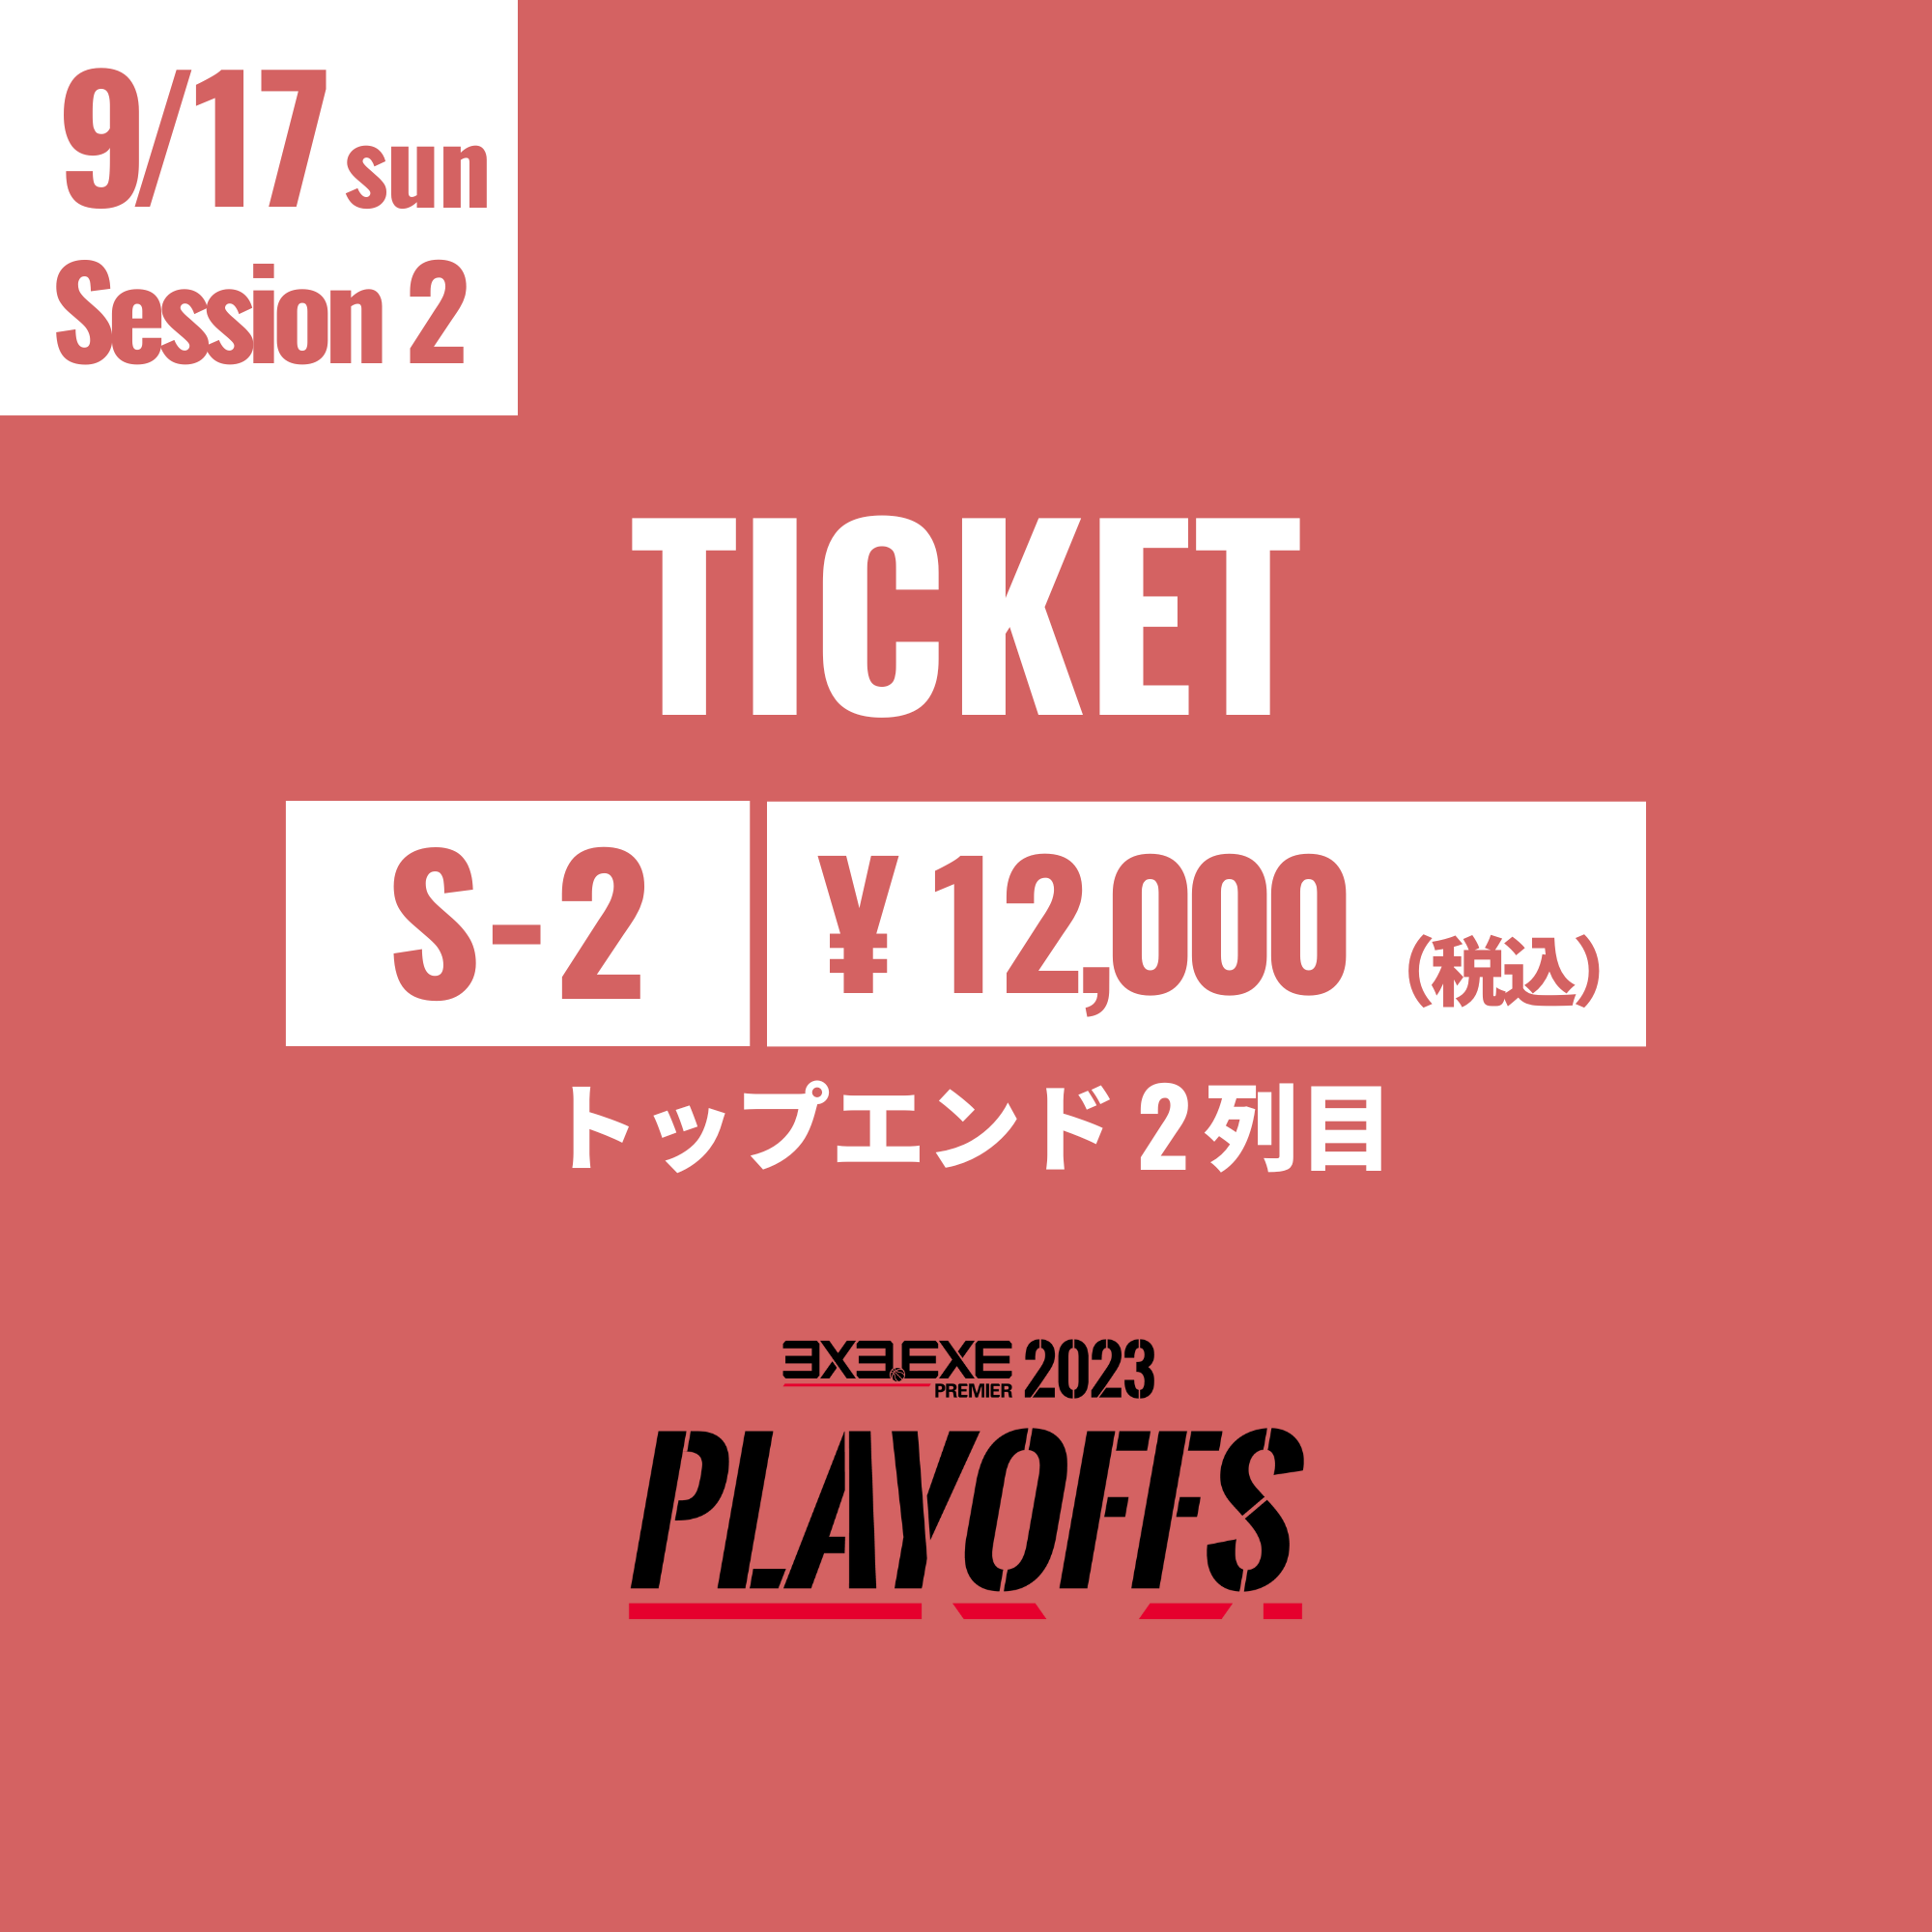 【S-2】9/17(日) PLAYOFFS Session2